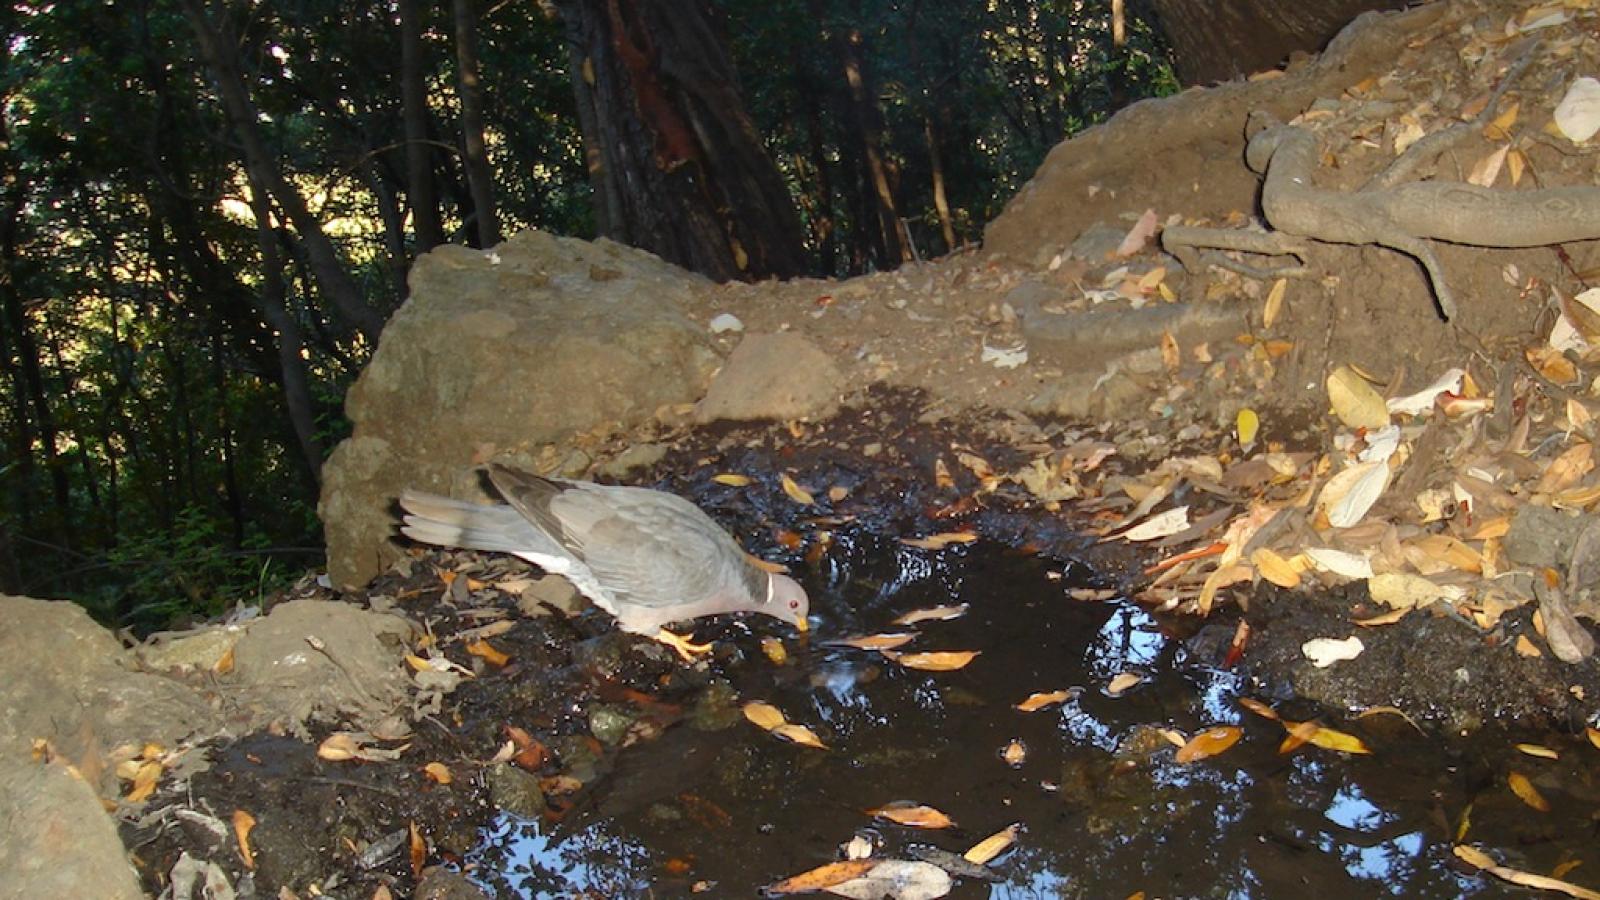 Band-tailed pigeon in Sierra Azul Open Space Preserve (Ken Hickman)